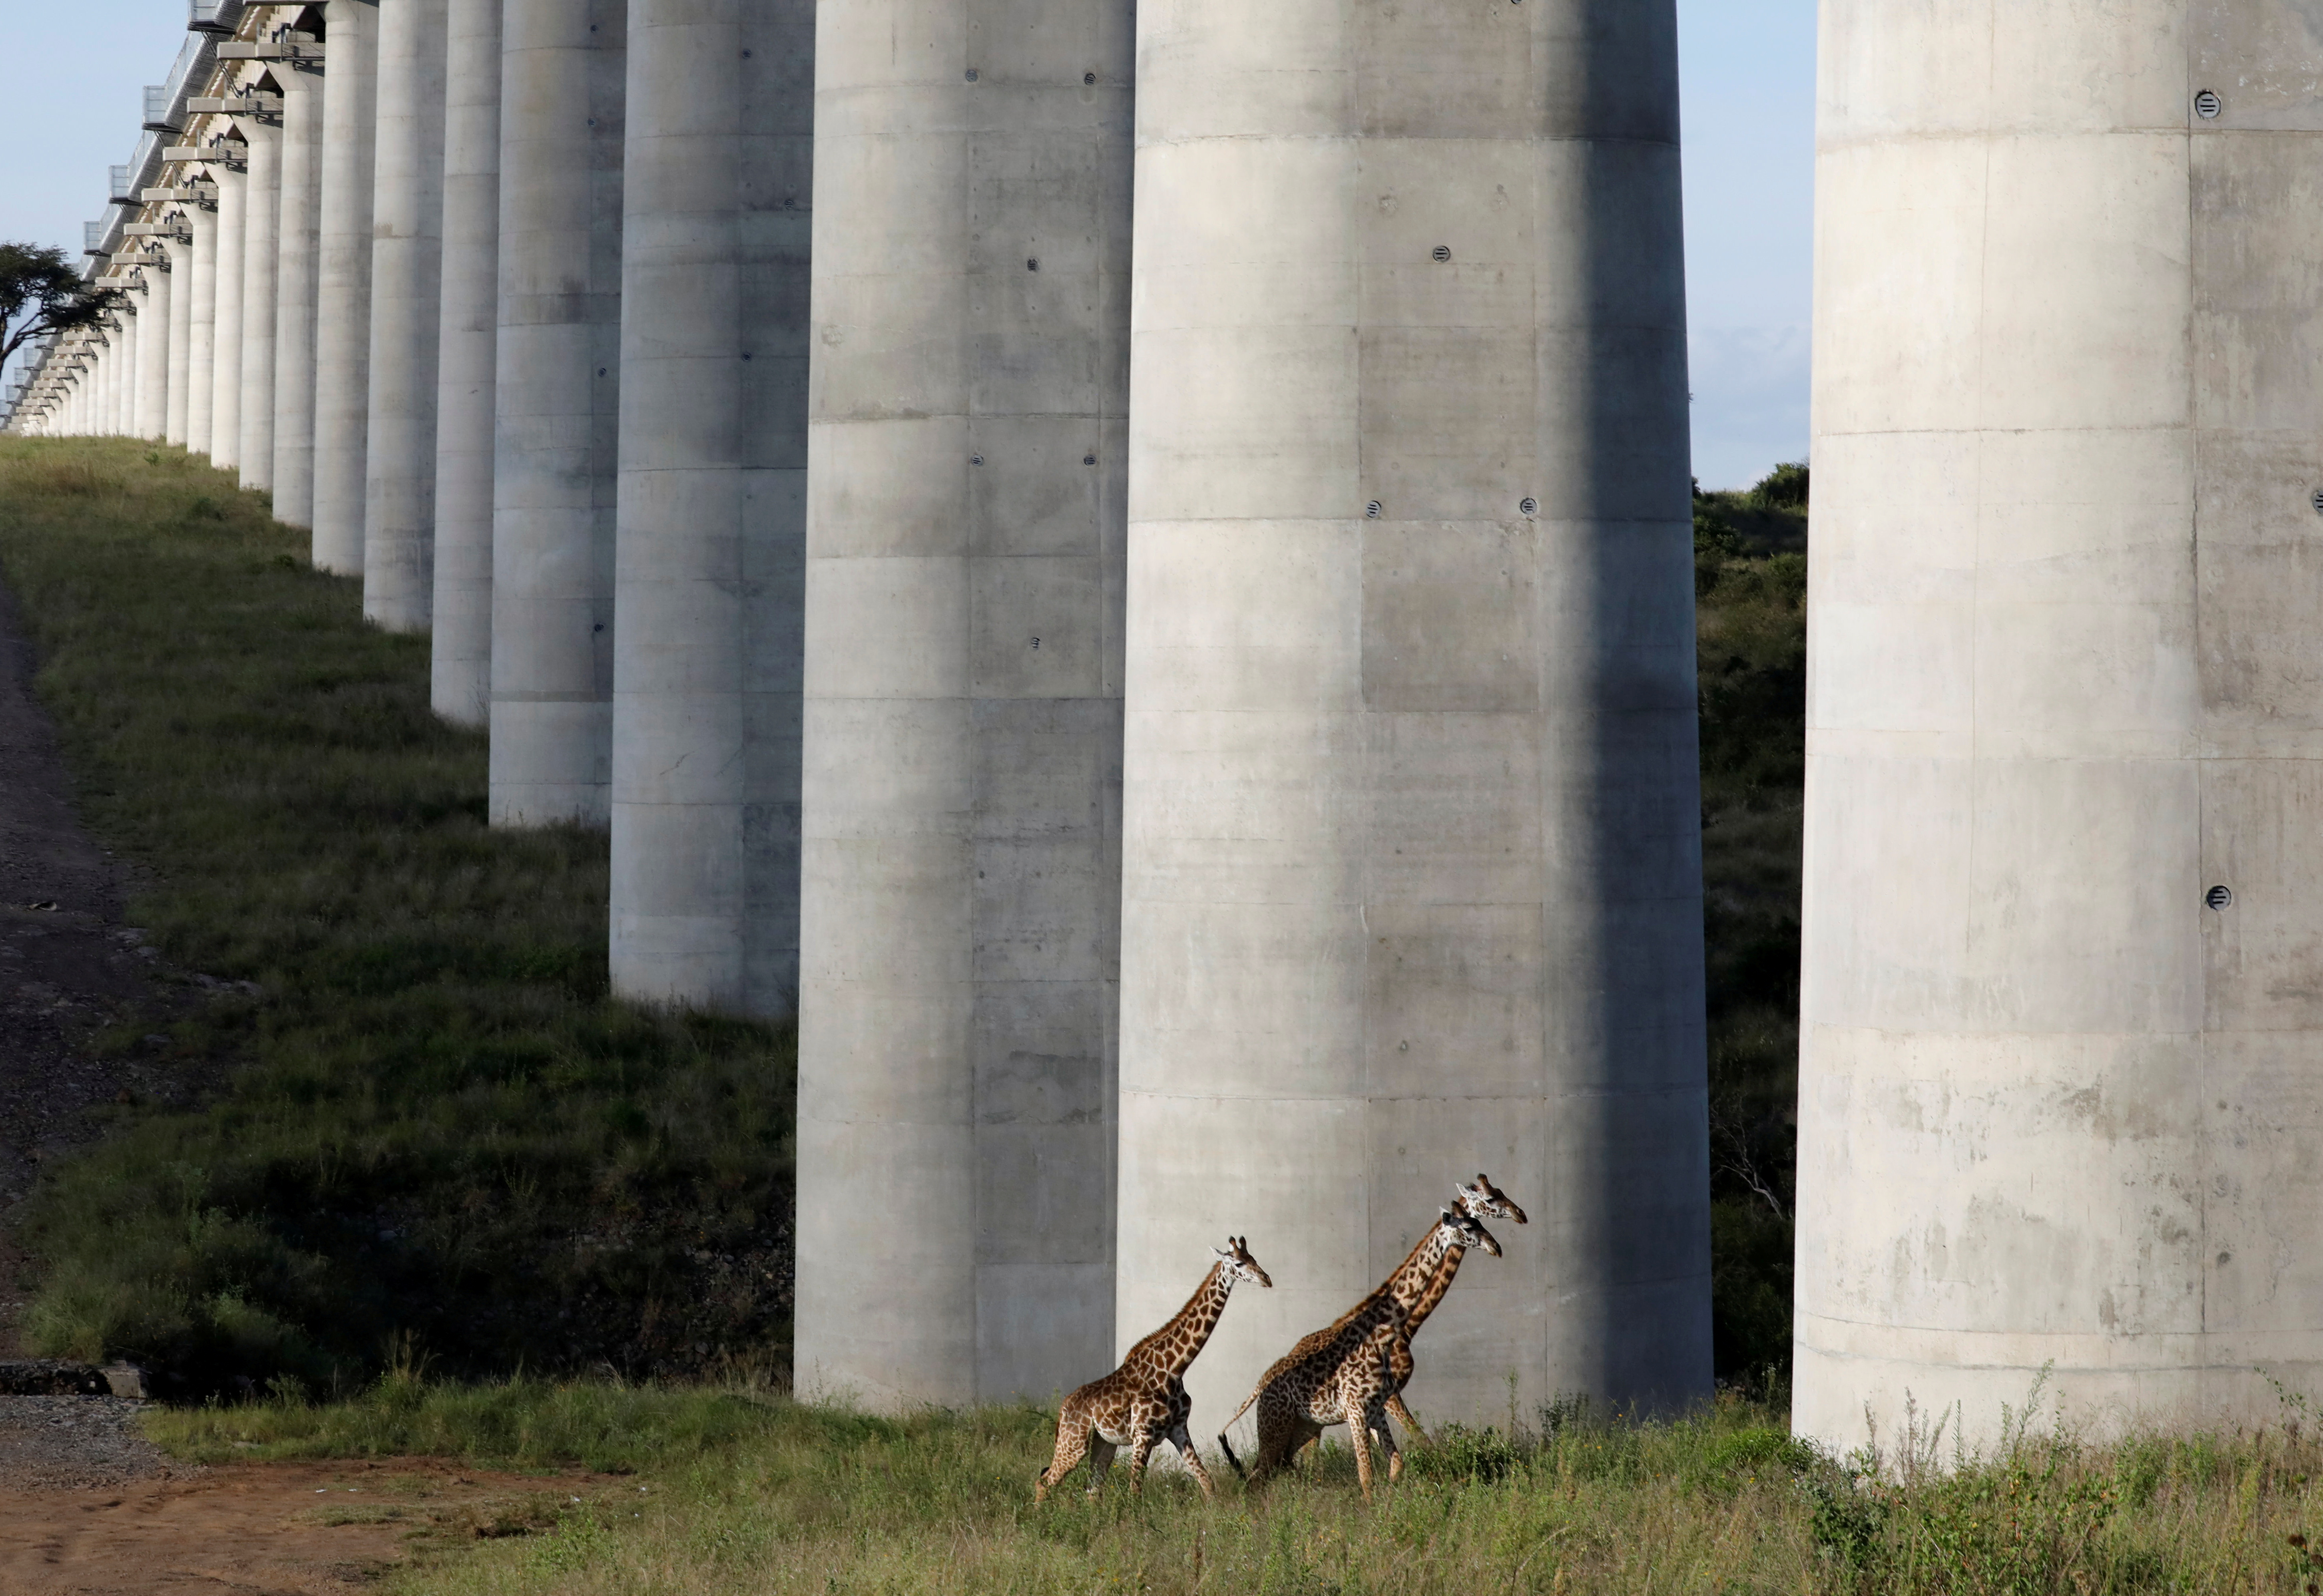 Giraffes cross under the bridge of the Standard Gauge Railway (SGR) line inside the Nairobi National Park in Nairobi